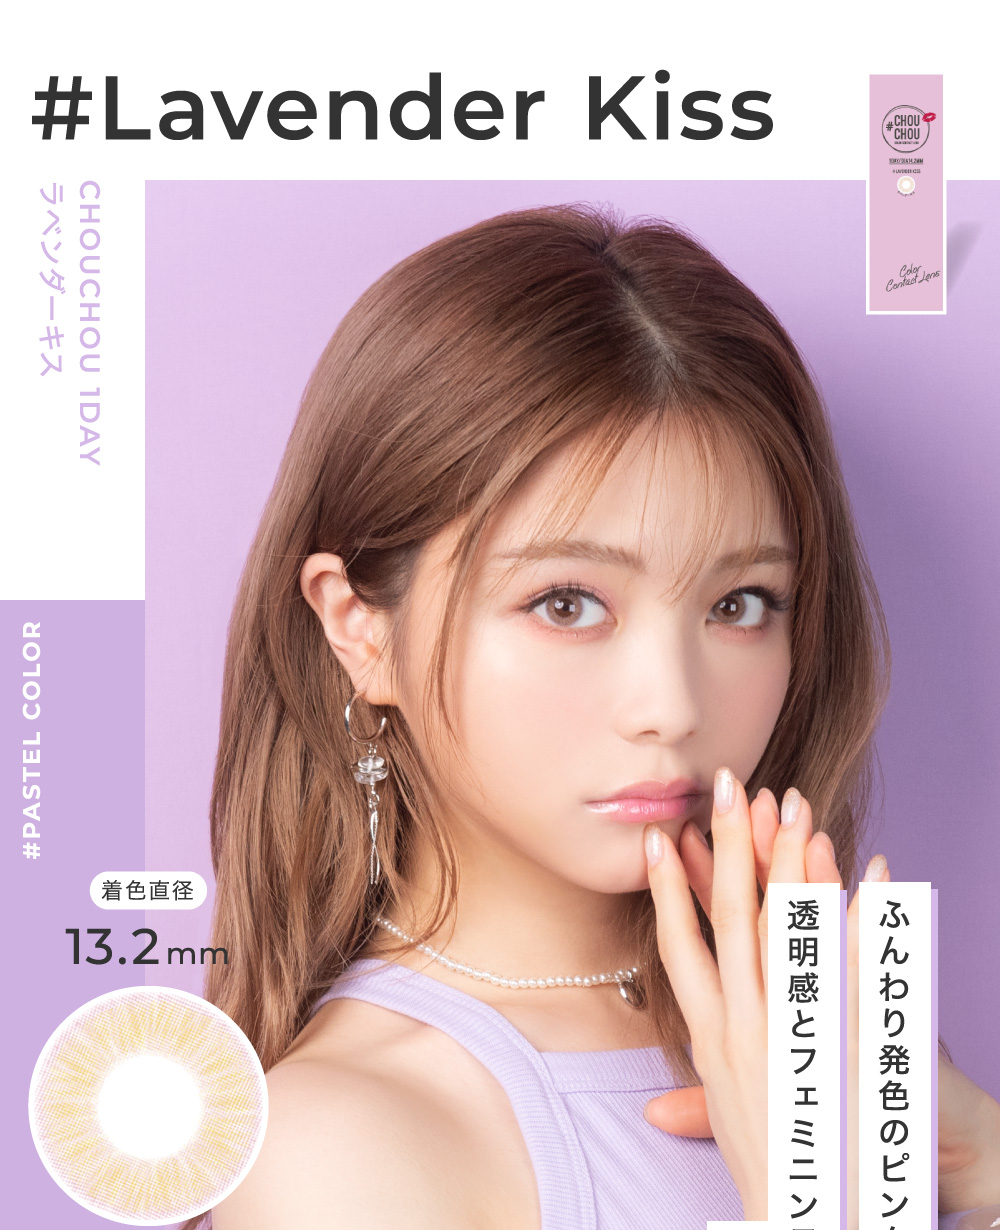 Lavender Kiss ラベンダーキス ふんわり発色のピンク×オレンジカラー。透明感とフェミニンテイストを加えた印象的な瞳に。